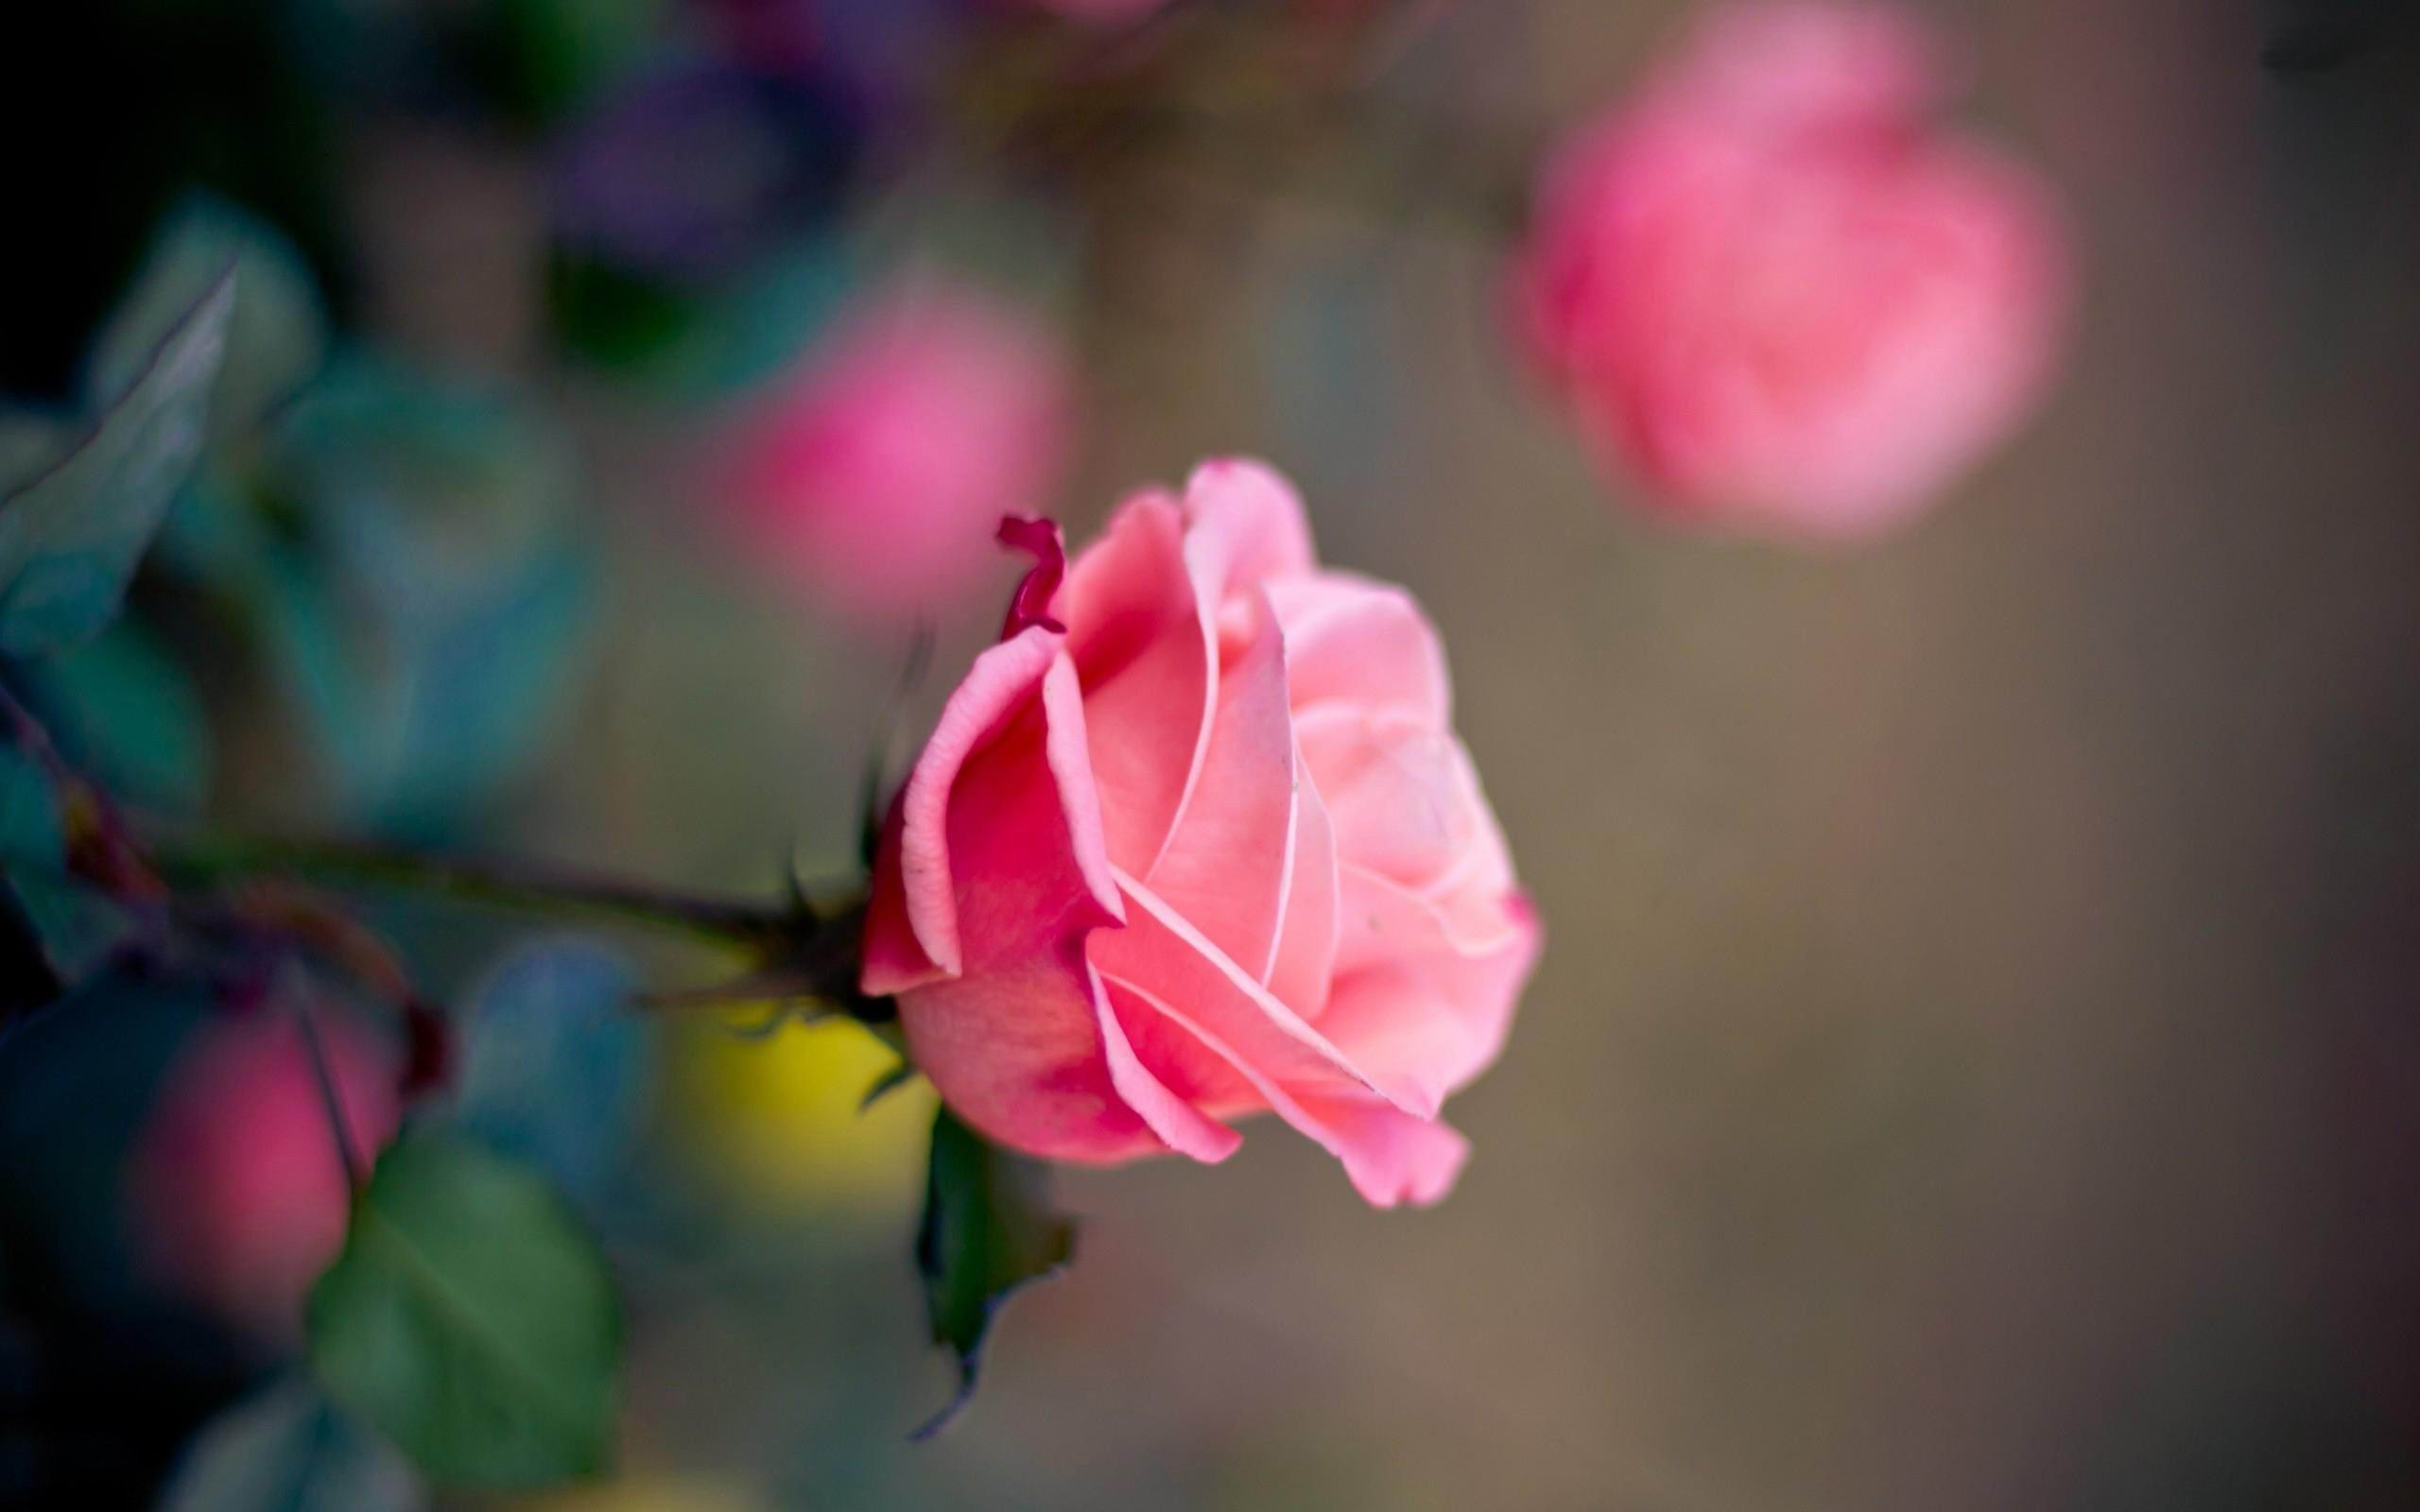 rose images hd wallpaper,flower,flowering plant,petal,garden roses,pink